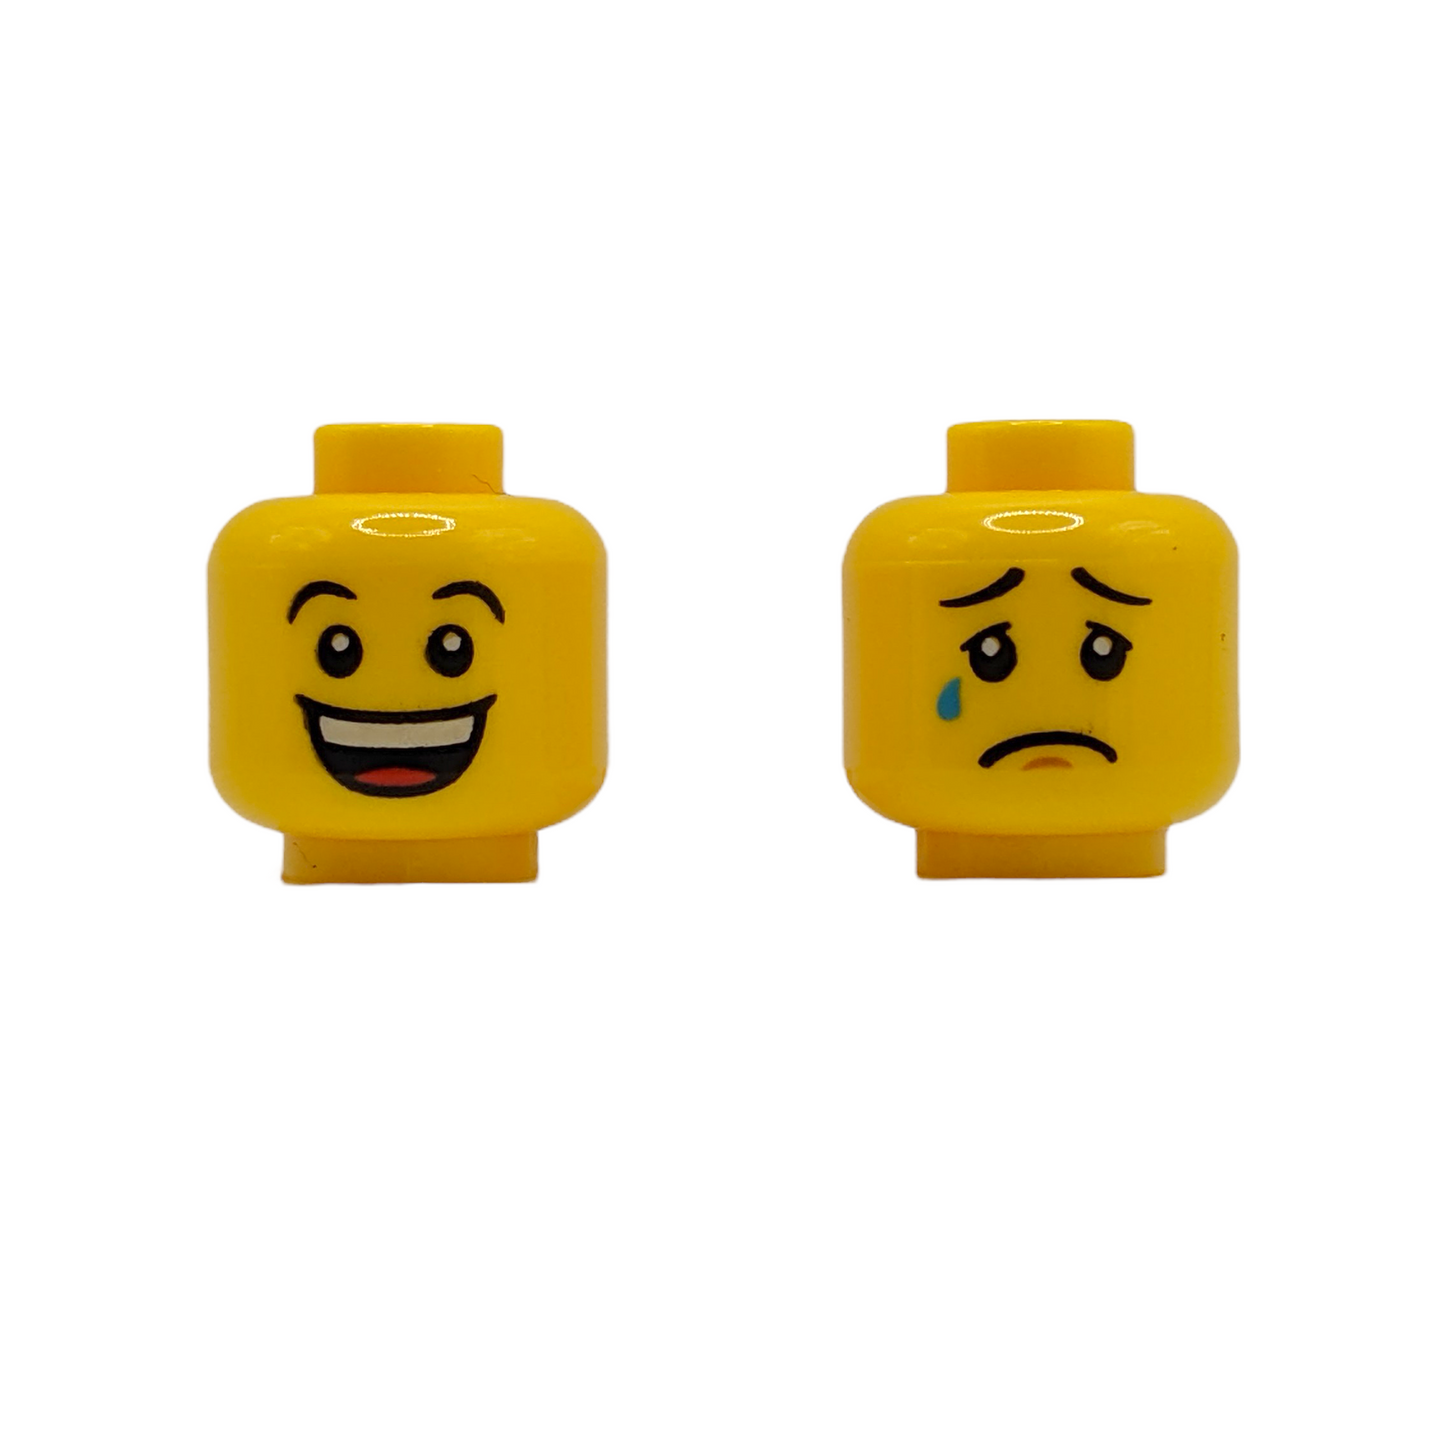 LEGO Head - 1762 Dual Sided Huge Grin